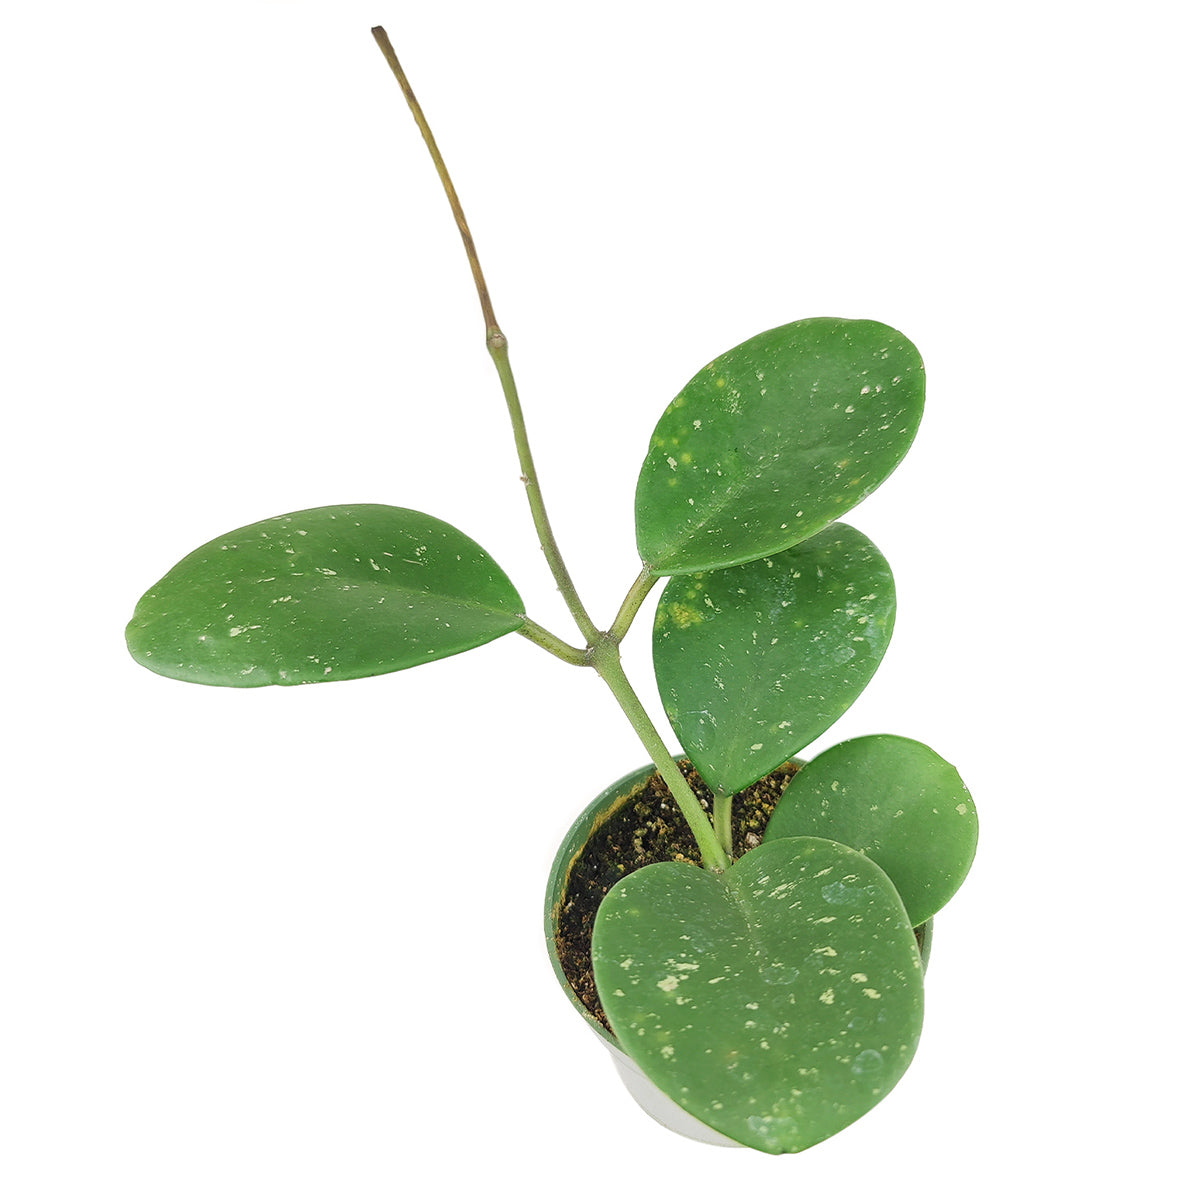  Hoya Obovata Splash, flowering houseplant, waxy plant, trailing plant for hanging baskets, easy care houseplant for beginners